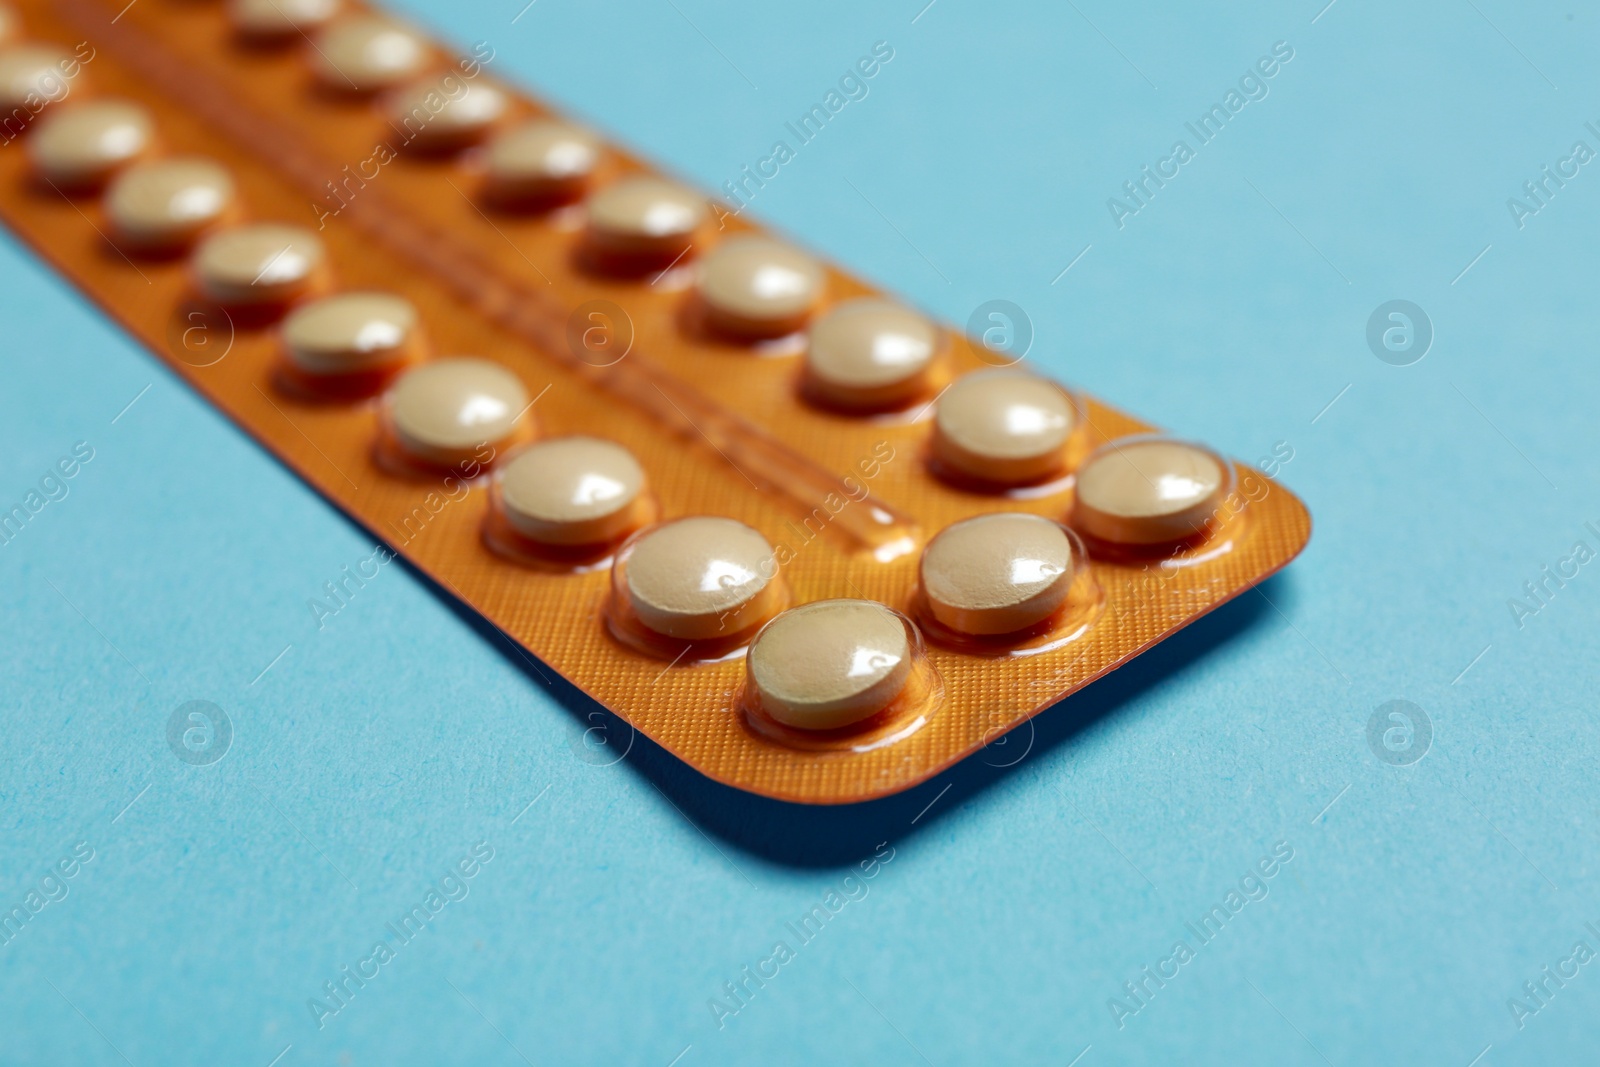 Photo of Birth control pills on light blue background, closeup